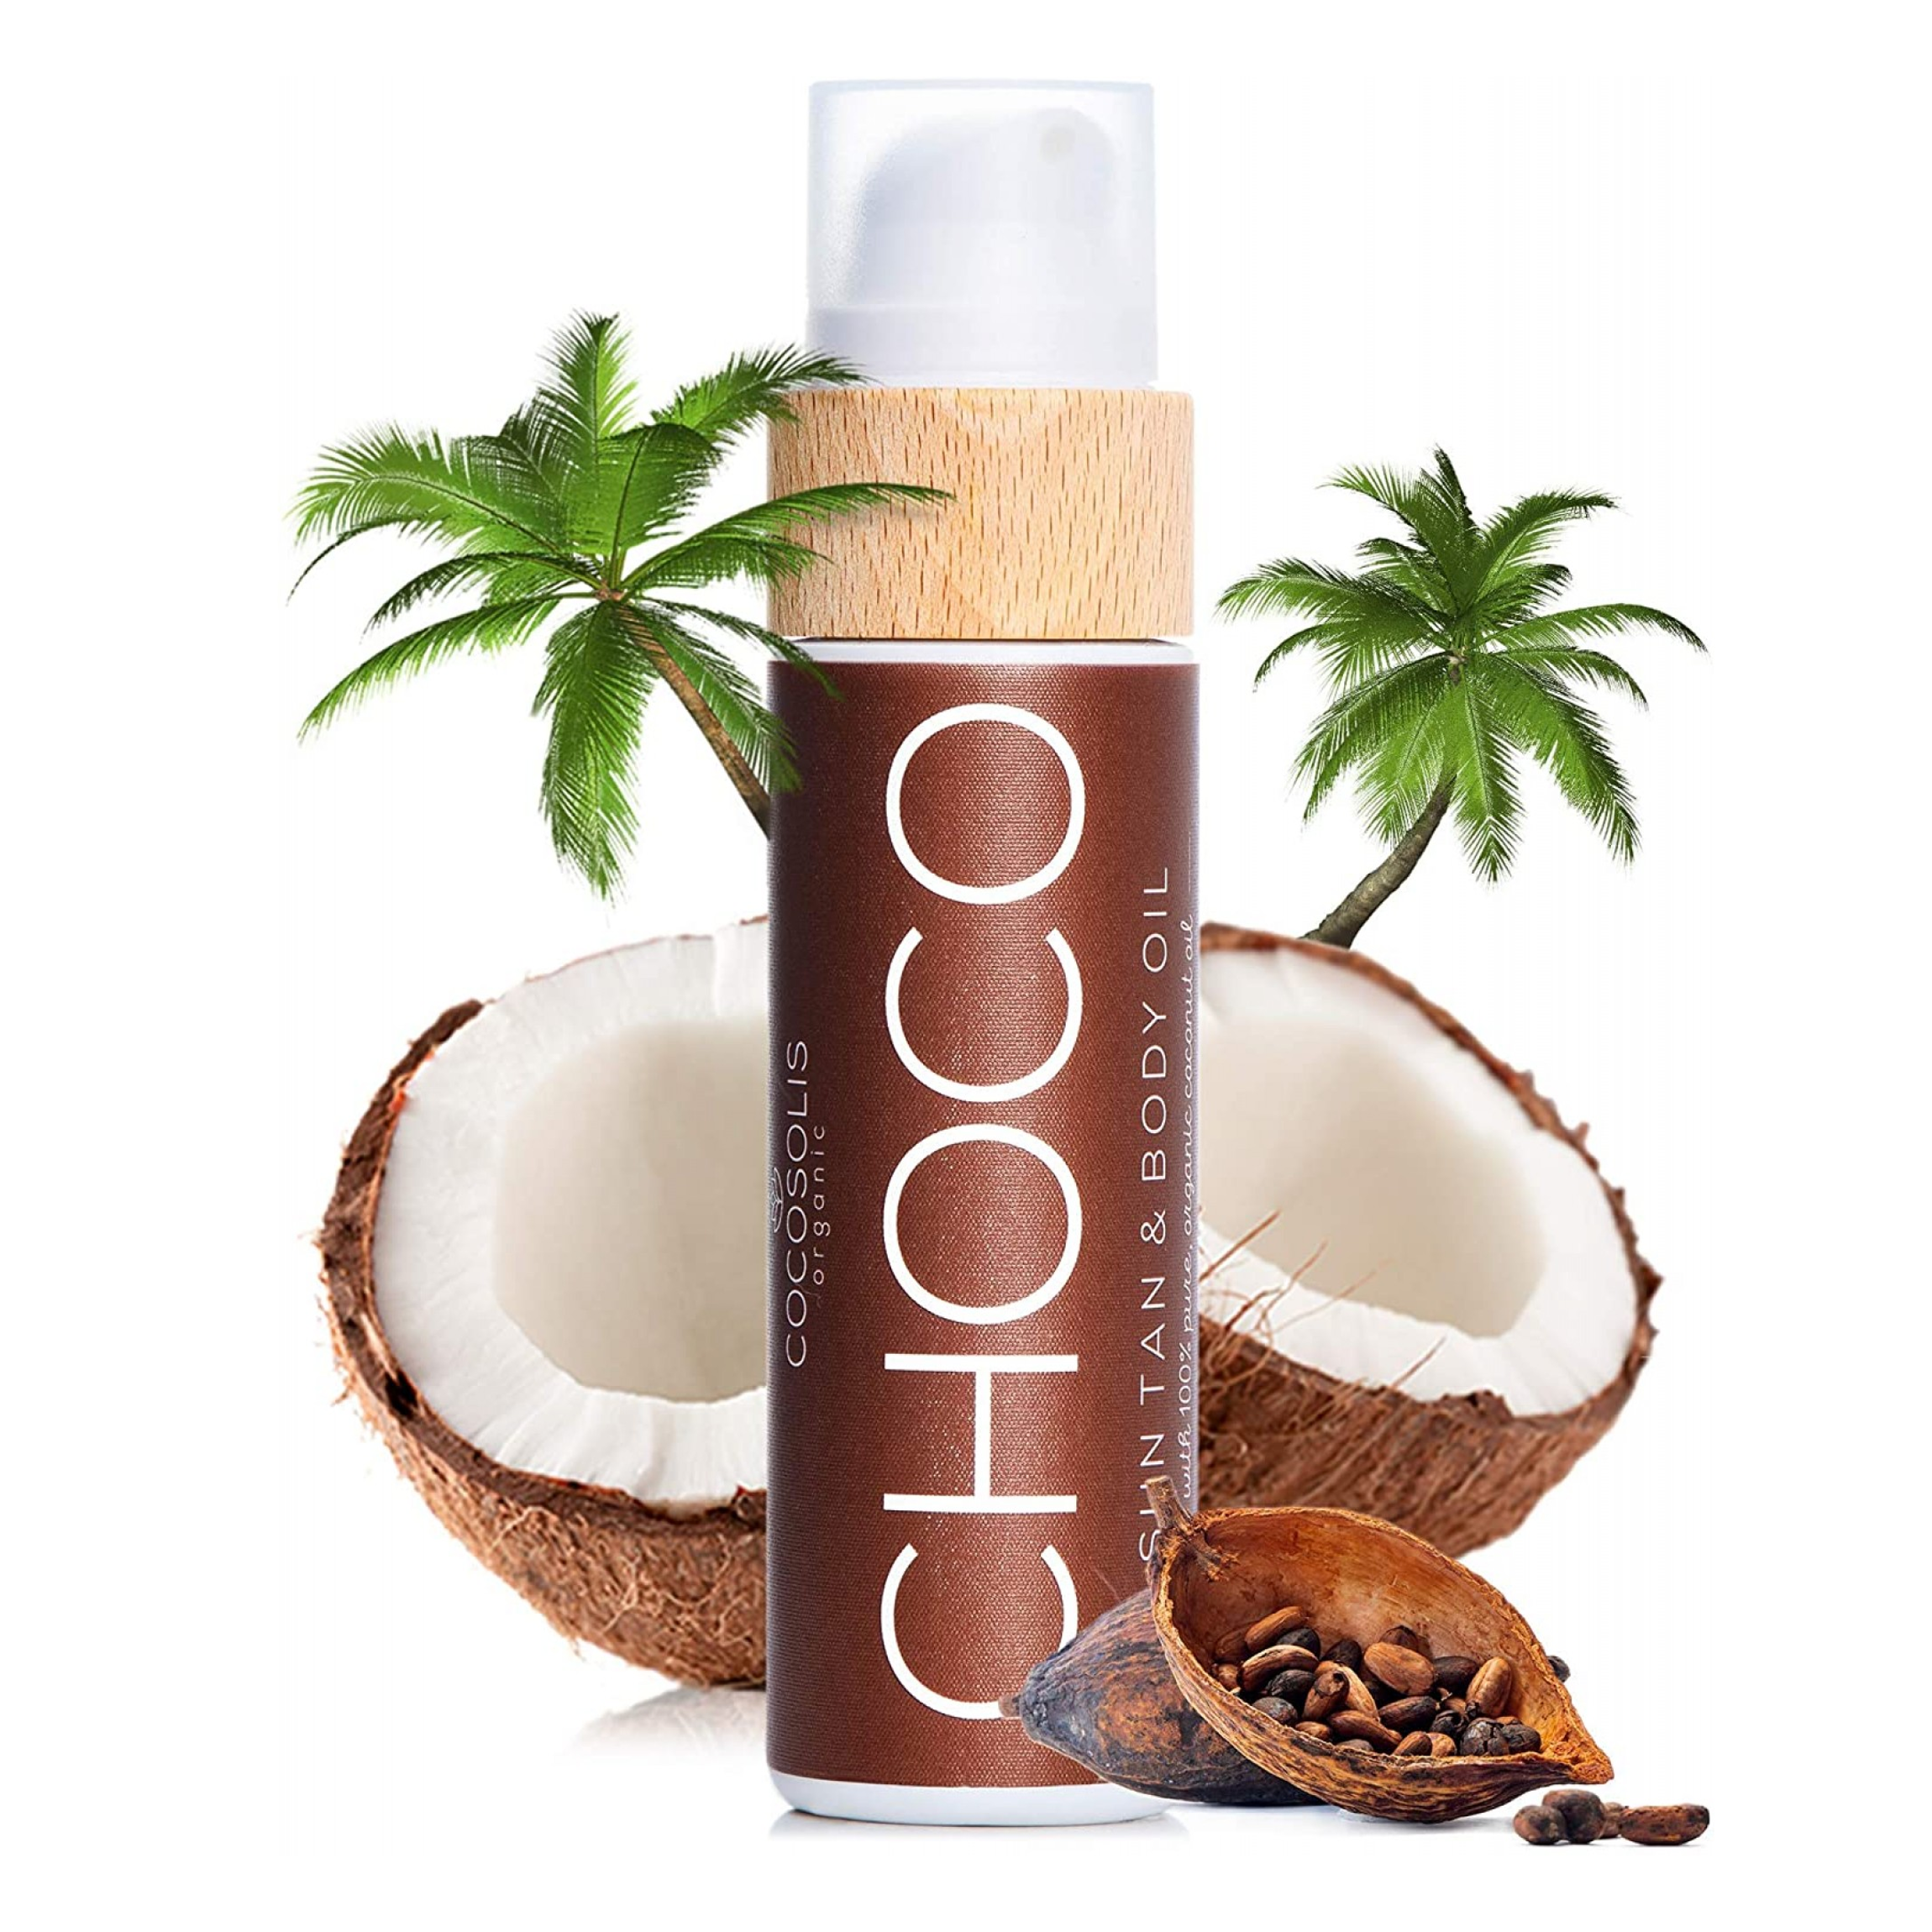 Choco Sun Tan & Body Oil 110ml Cocosolis